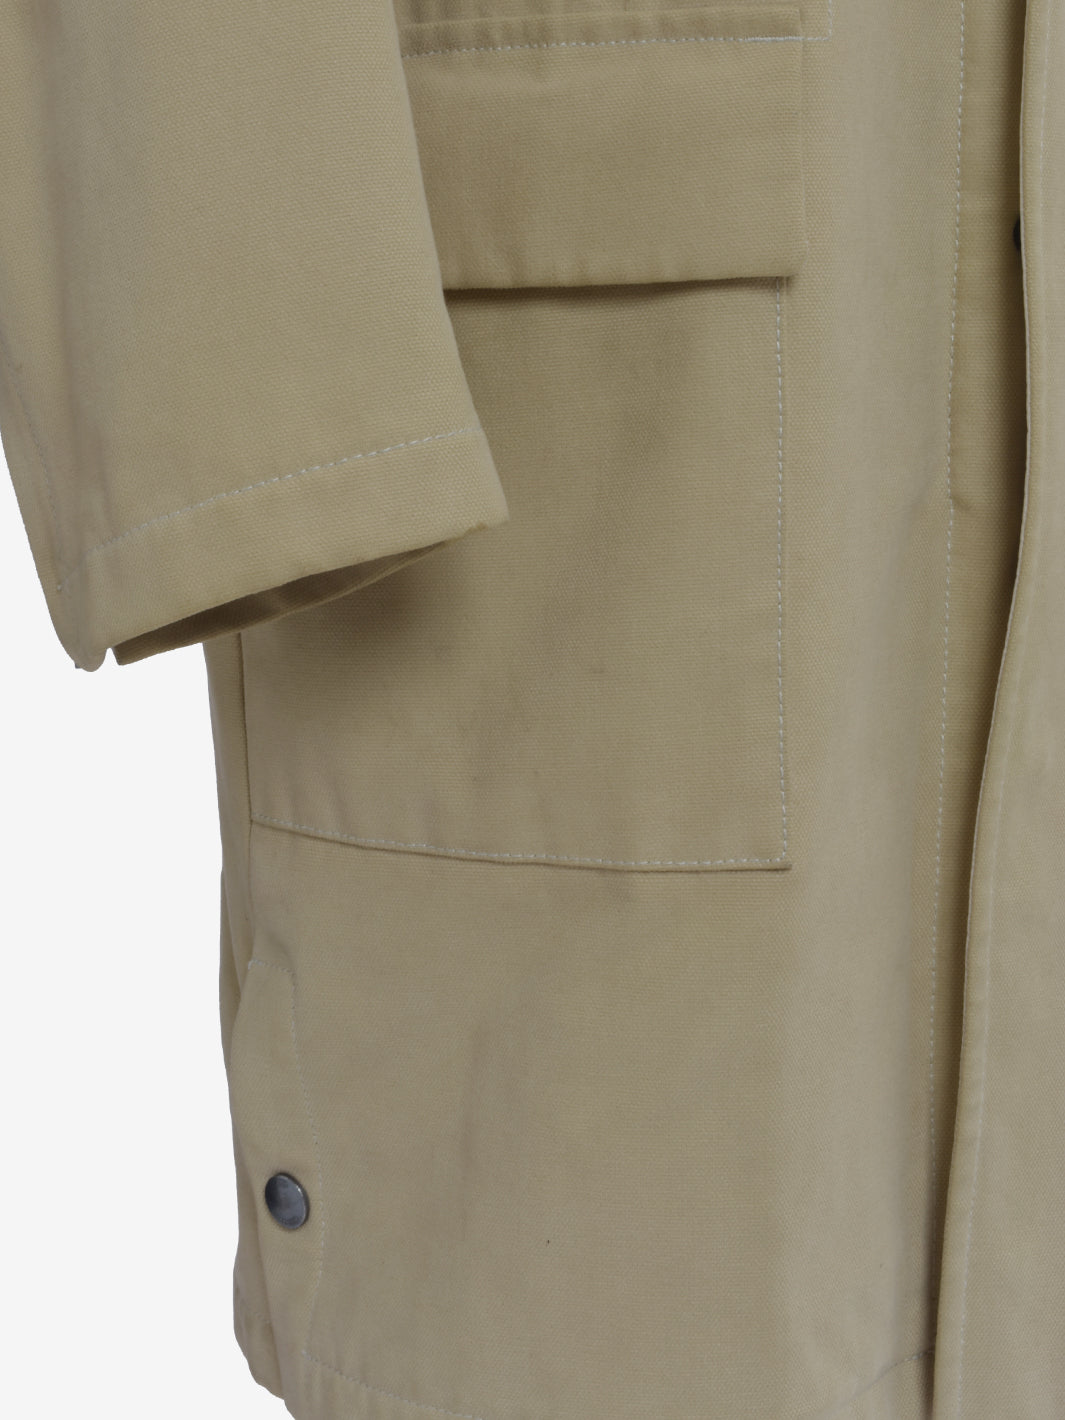 Hugo Boss Beige Coat With Pockets